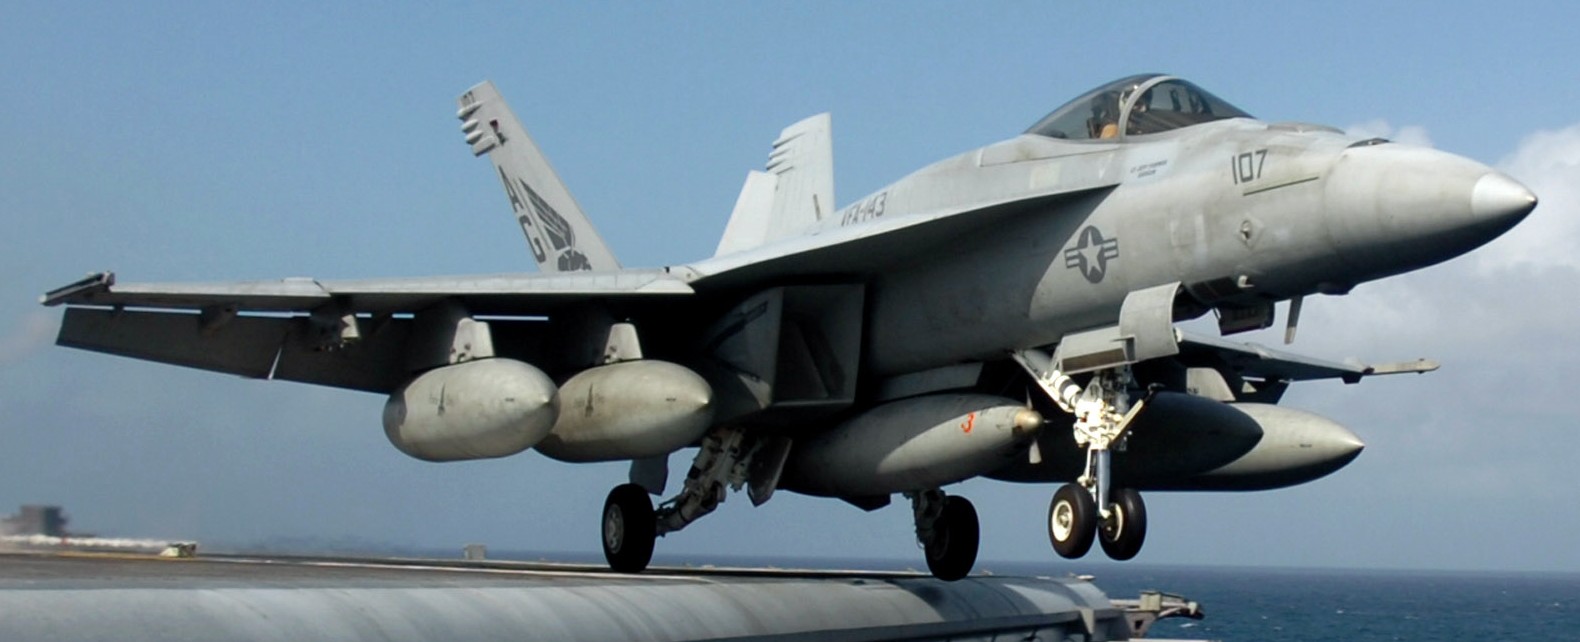 vfa-143 pukin dogs strike fighter squadron f/a-18e super hornet cvw-7 uss dwight d. eisenhower cvn-69 2007 68